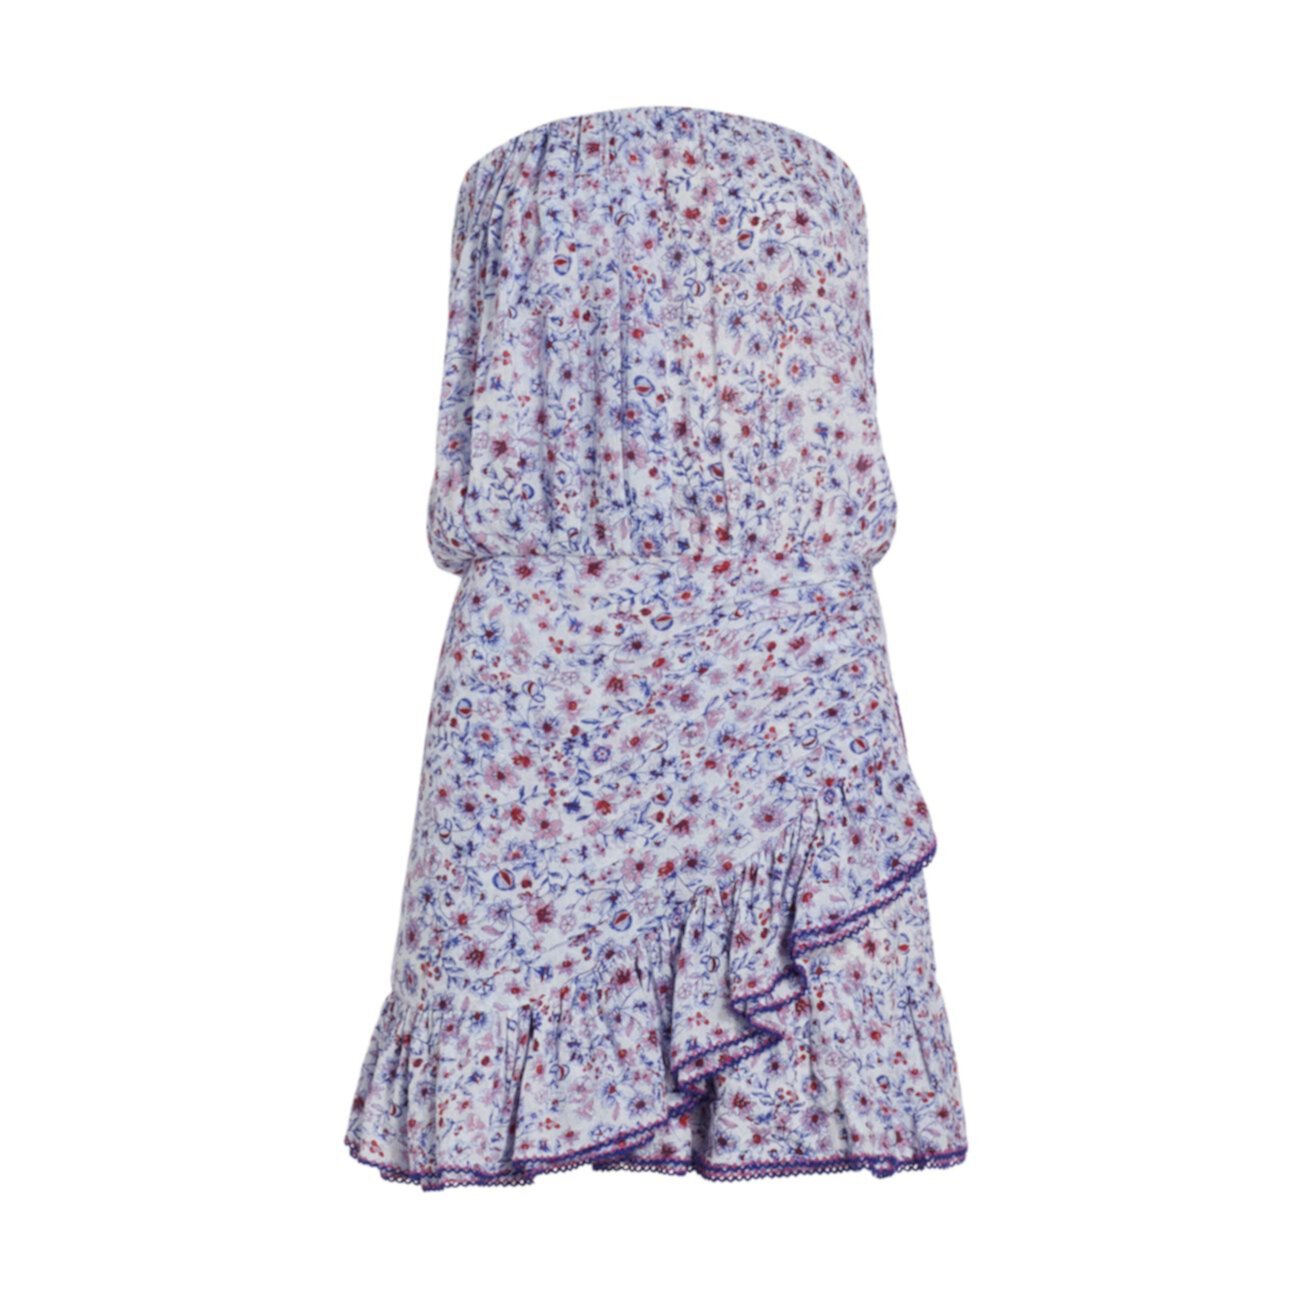 Мини-платье Ambra без бретелек с цветочным принтом Poupette St Barth